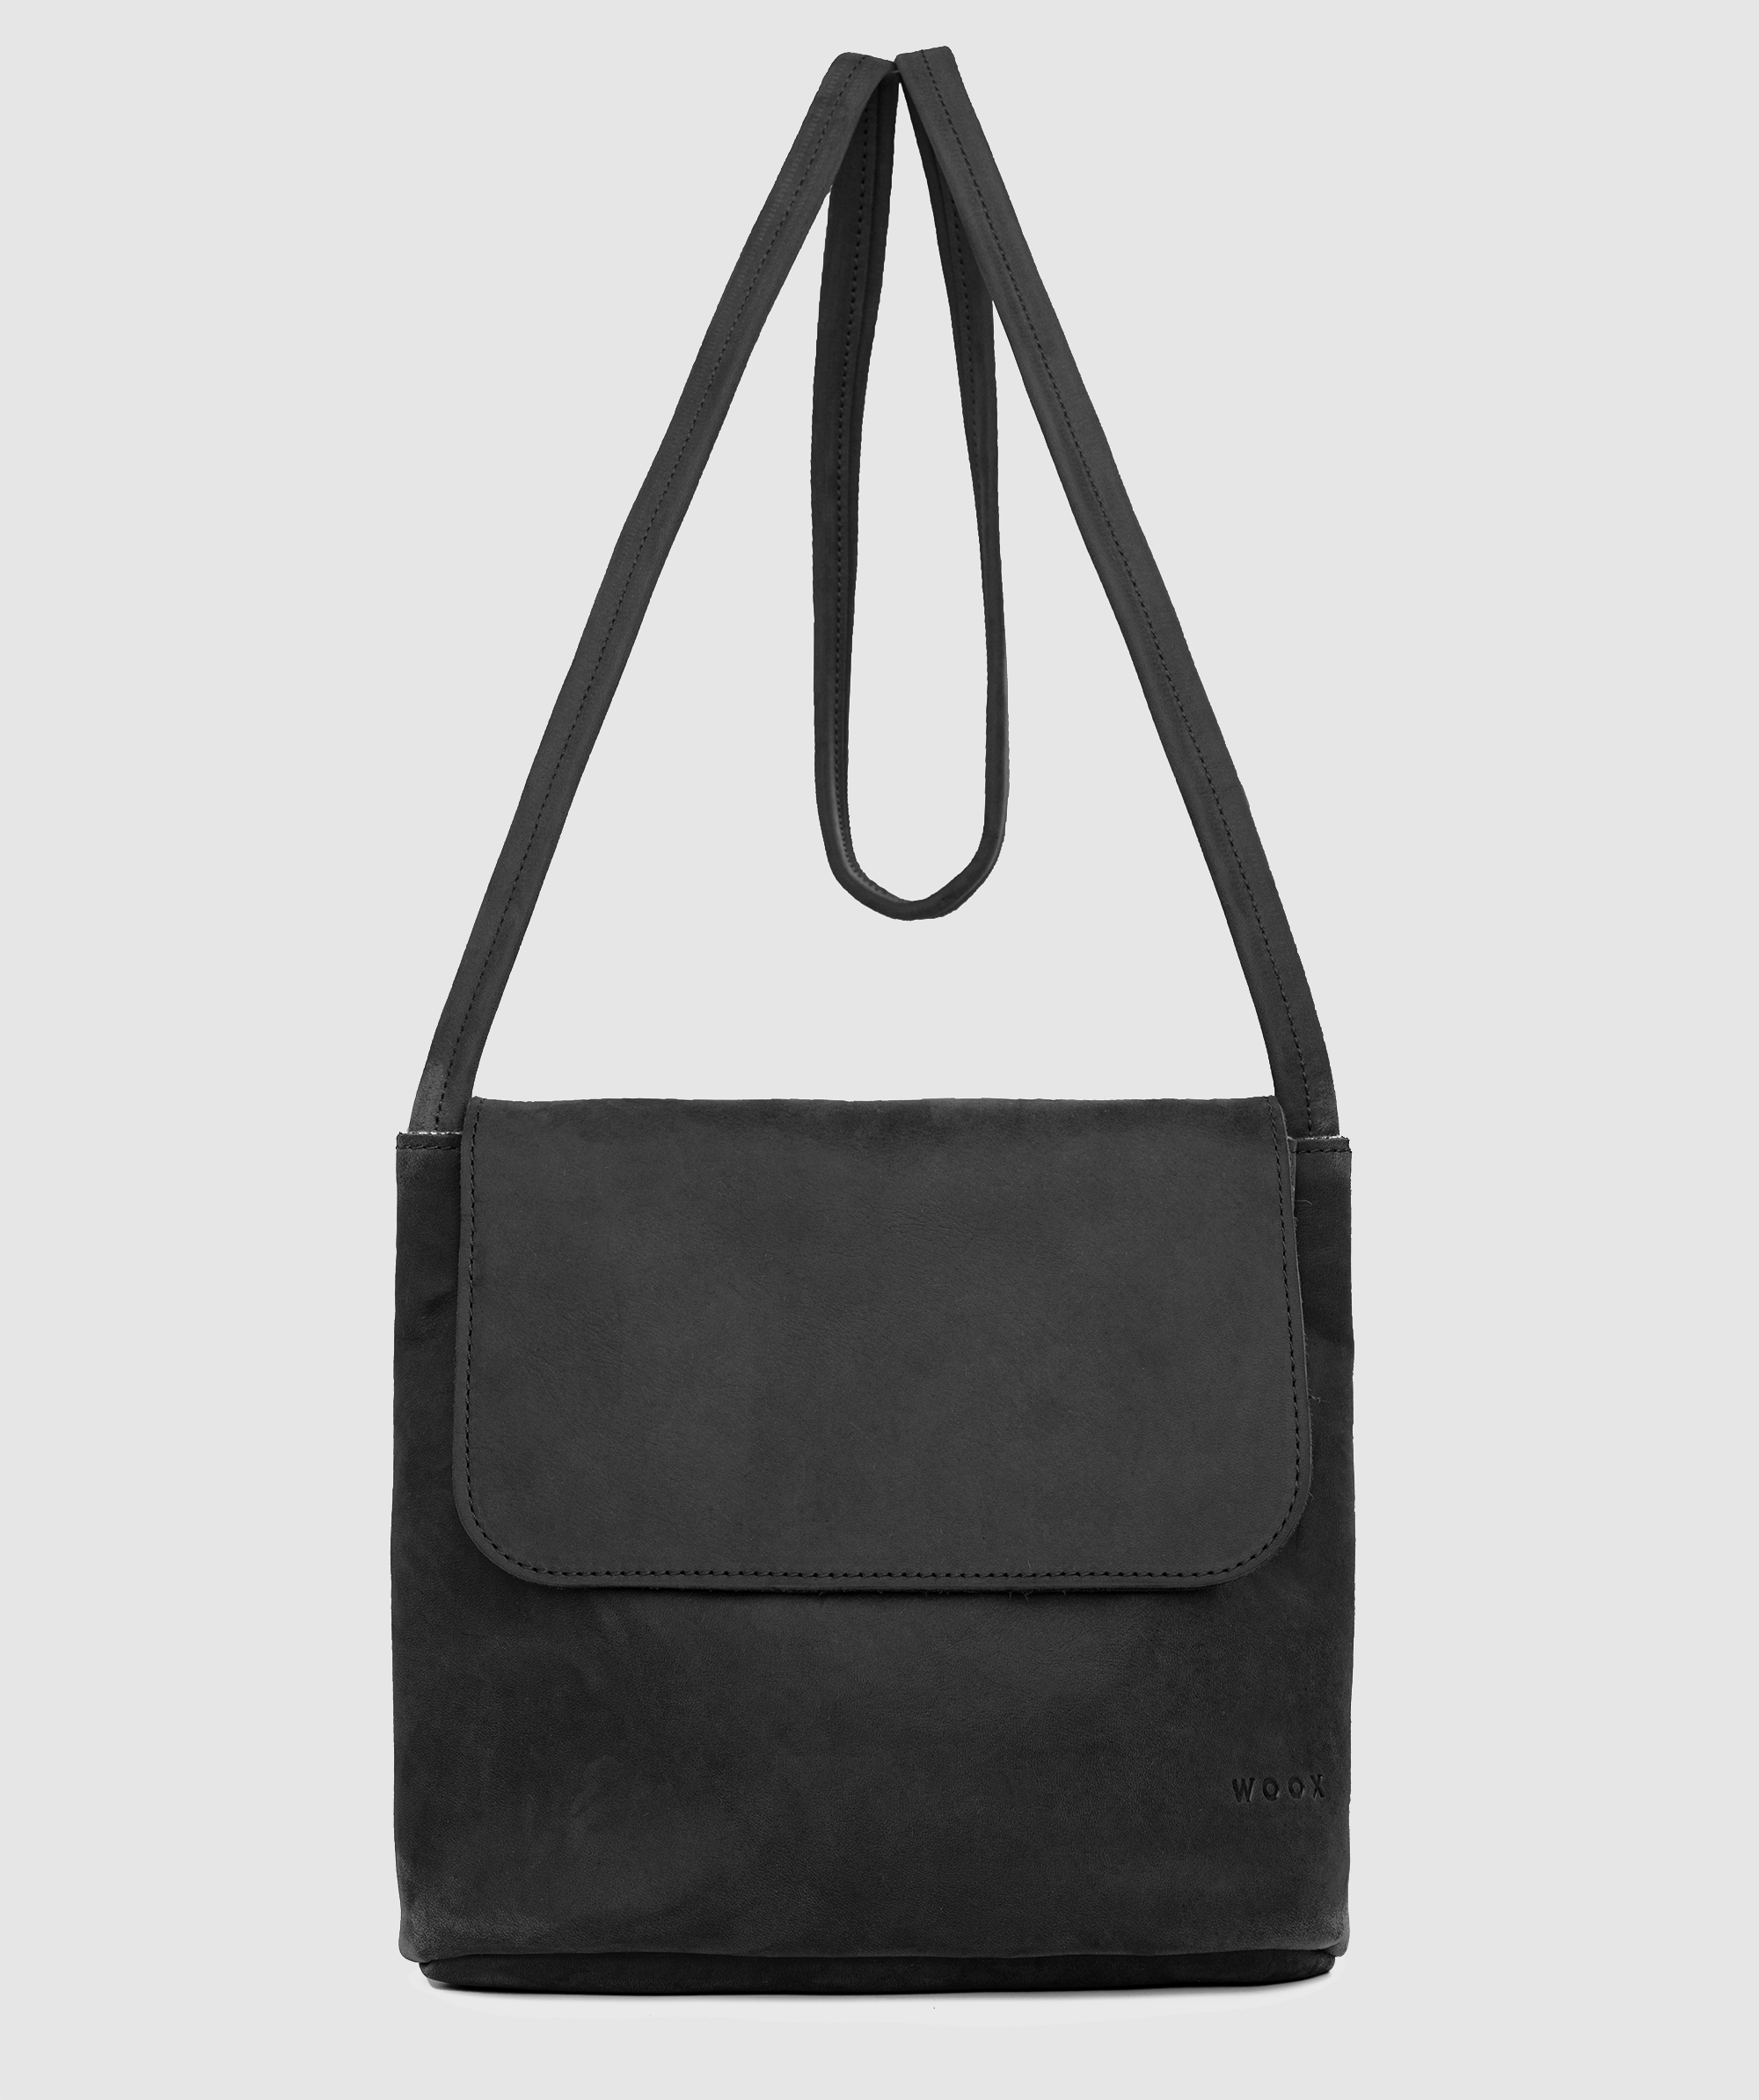 Handbag WOOX Cortes Black